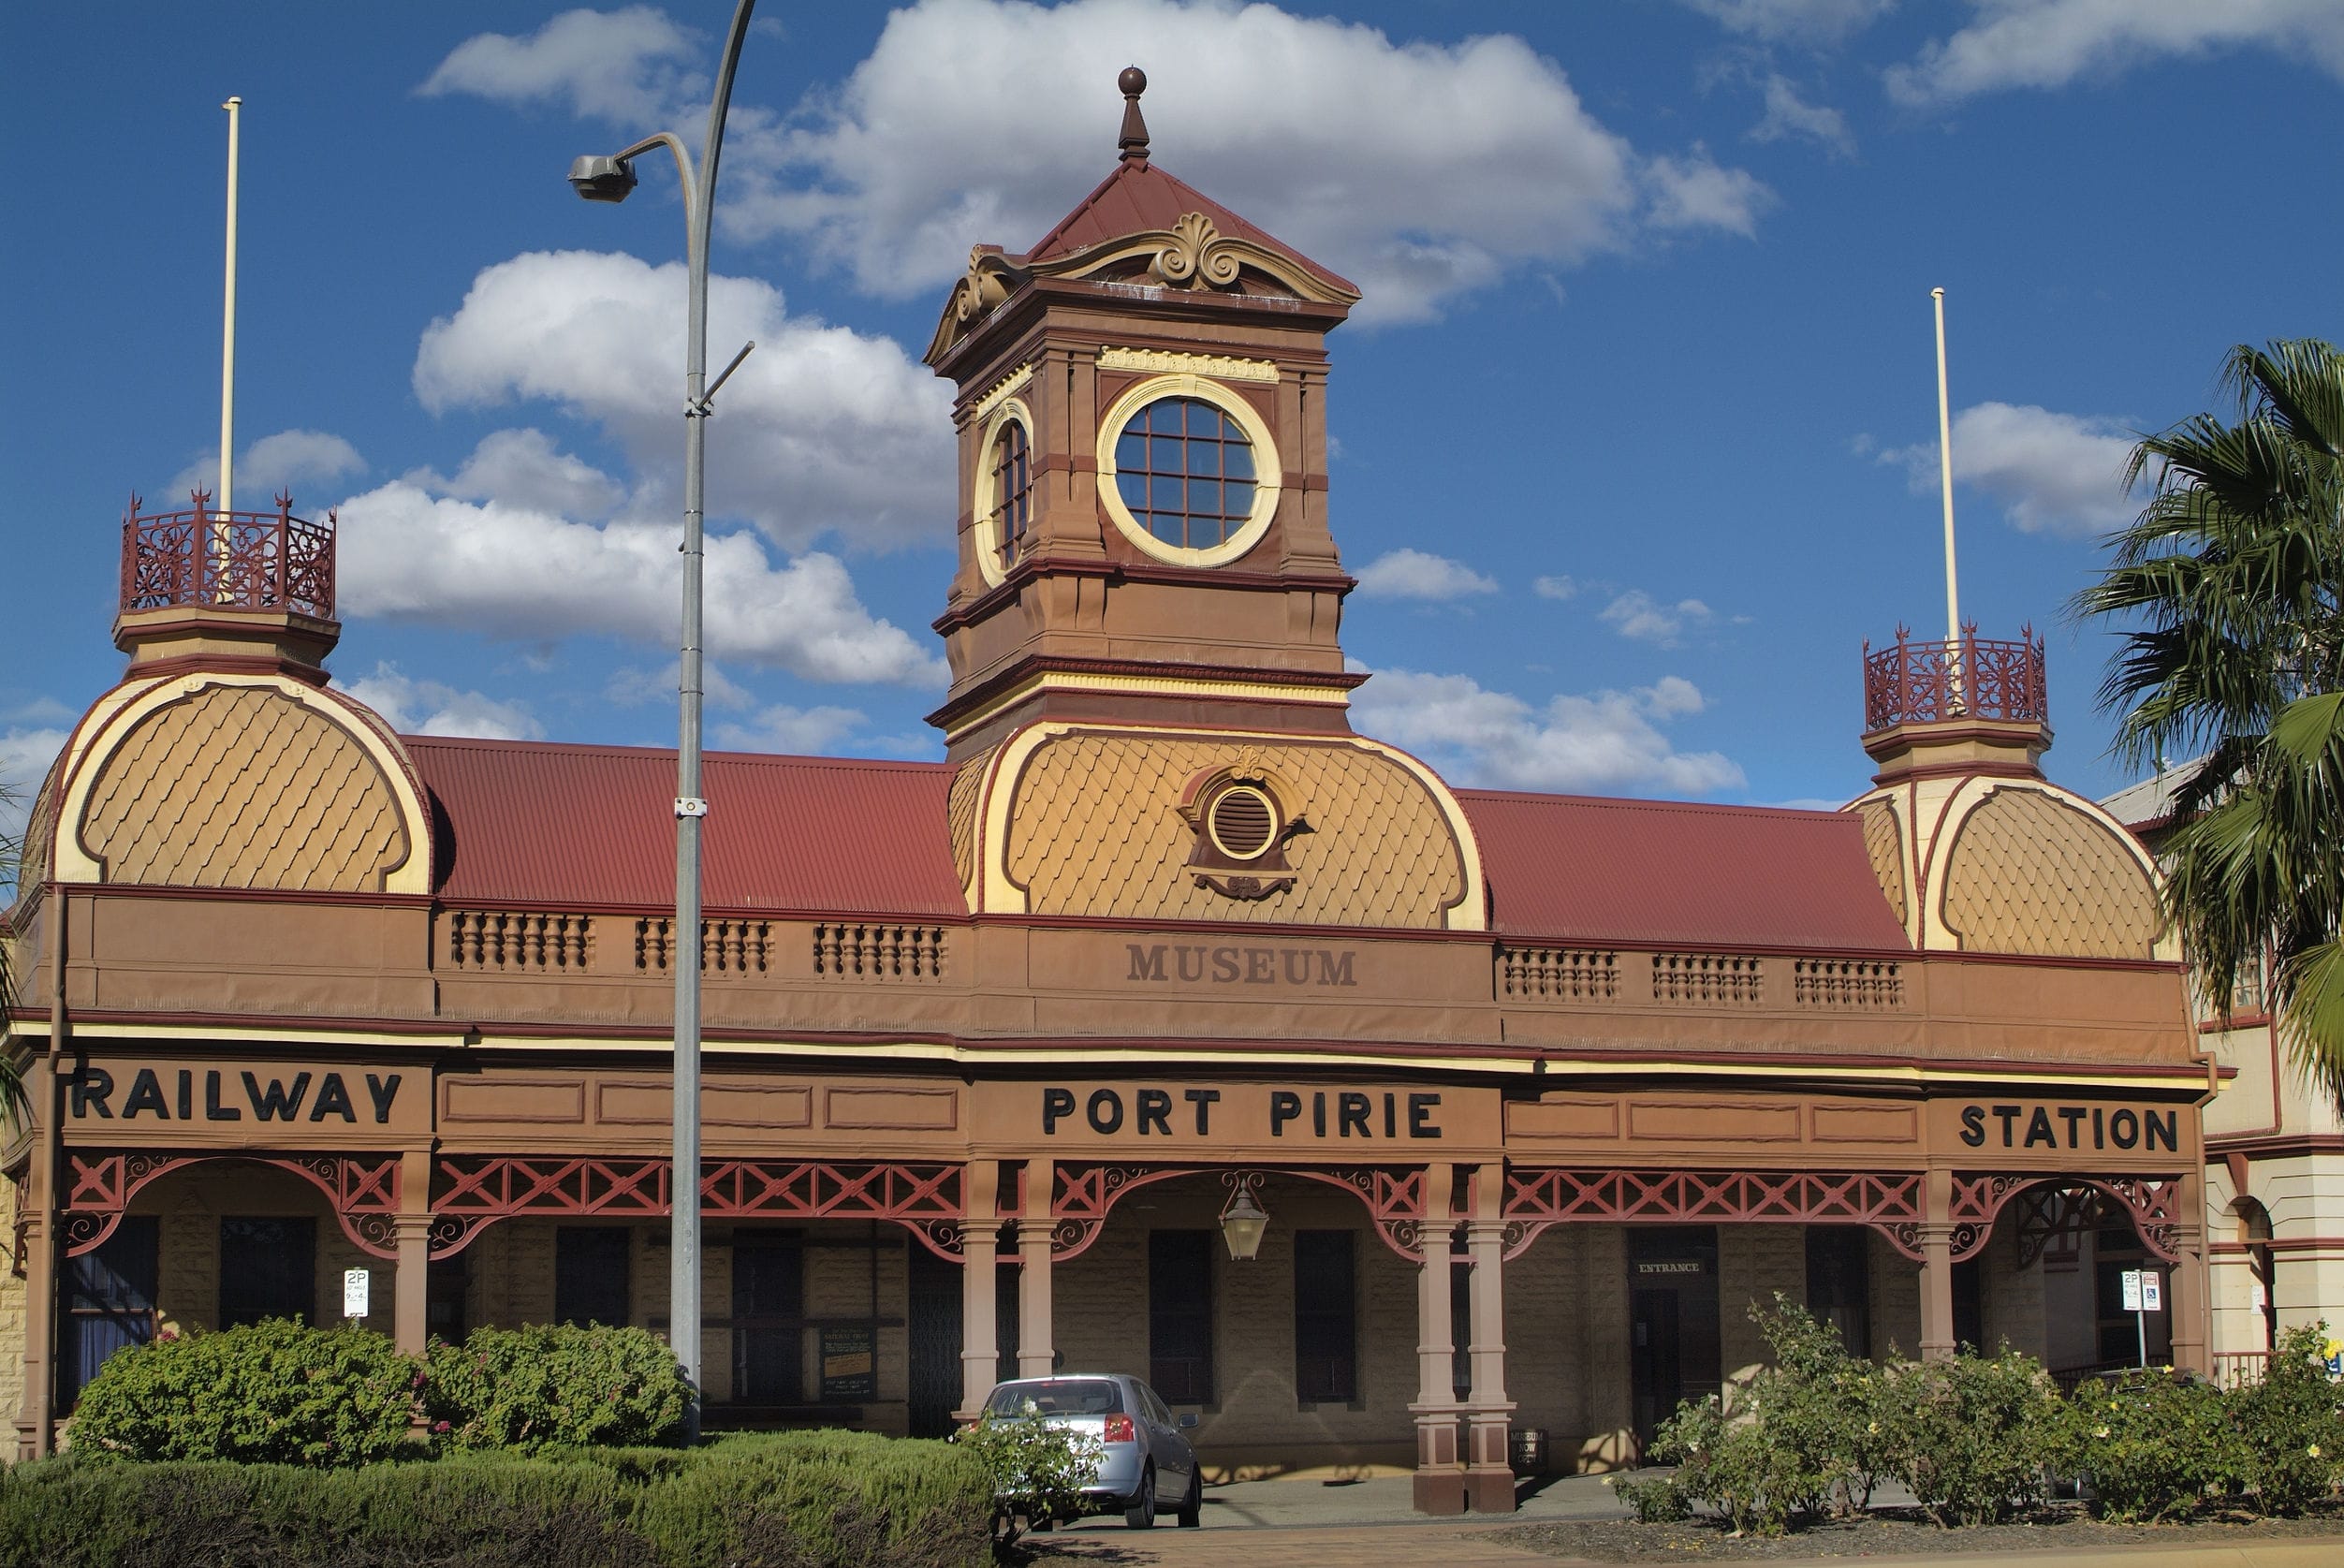 Old Railway Station in Port Pirie - South Australia